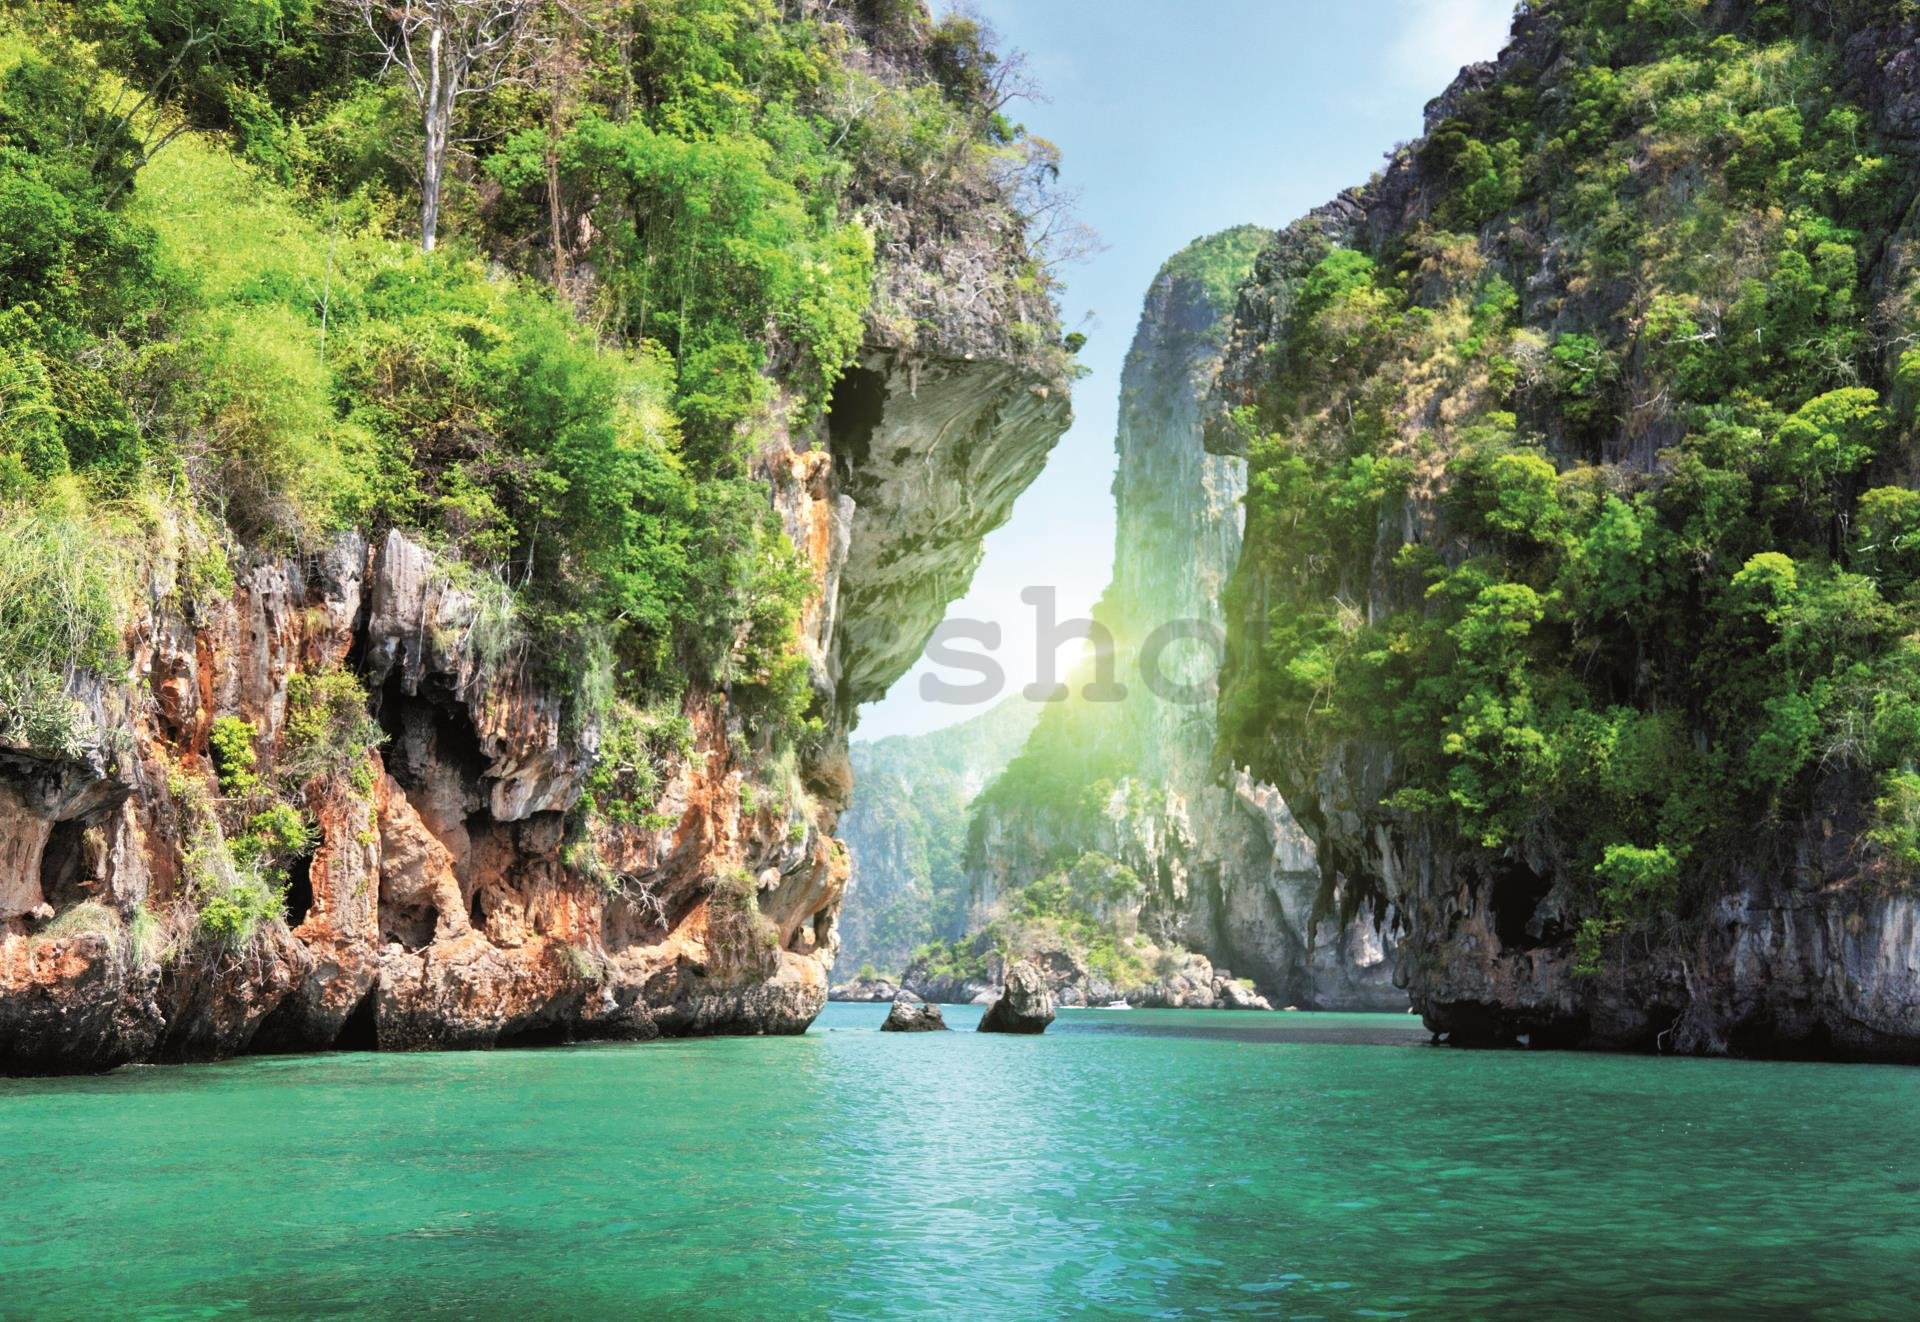 Fototapeta: Thajsko (1) - 184x254 cm